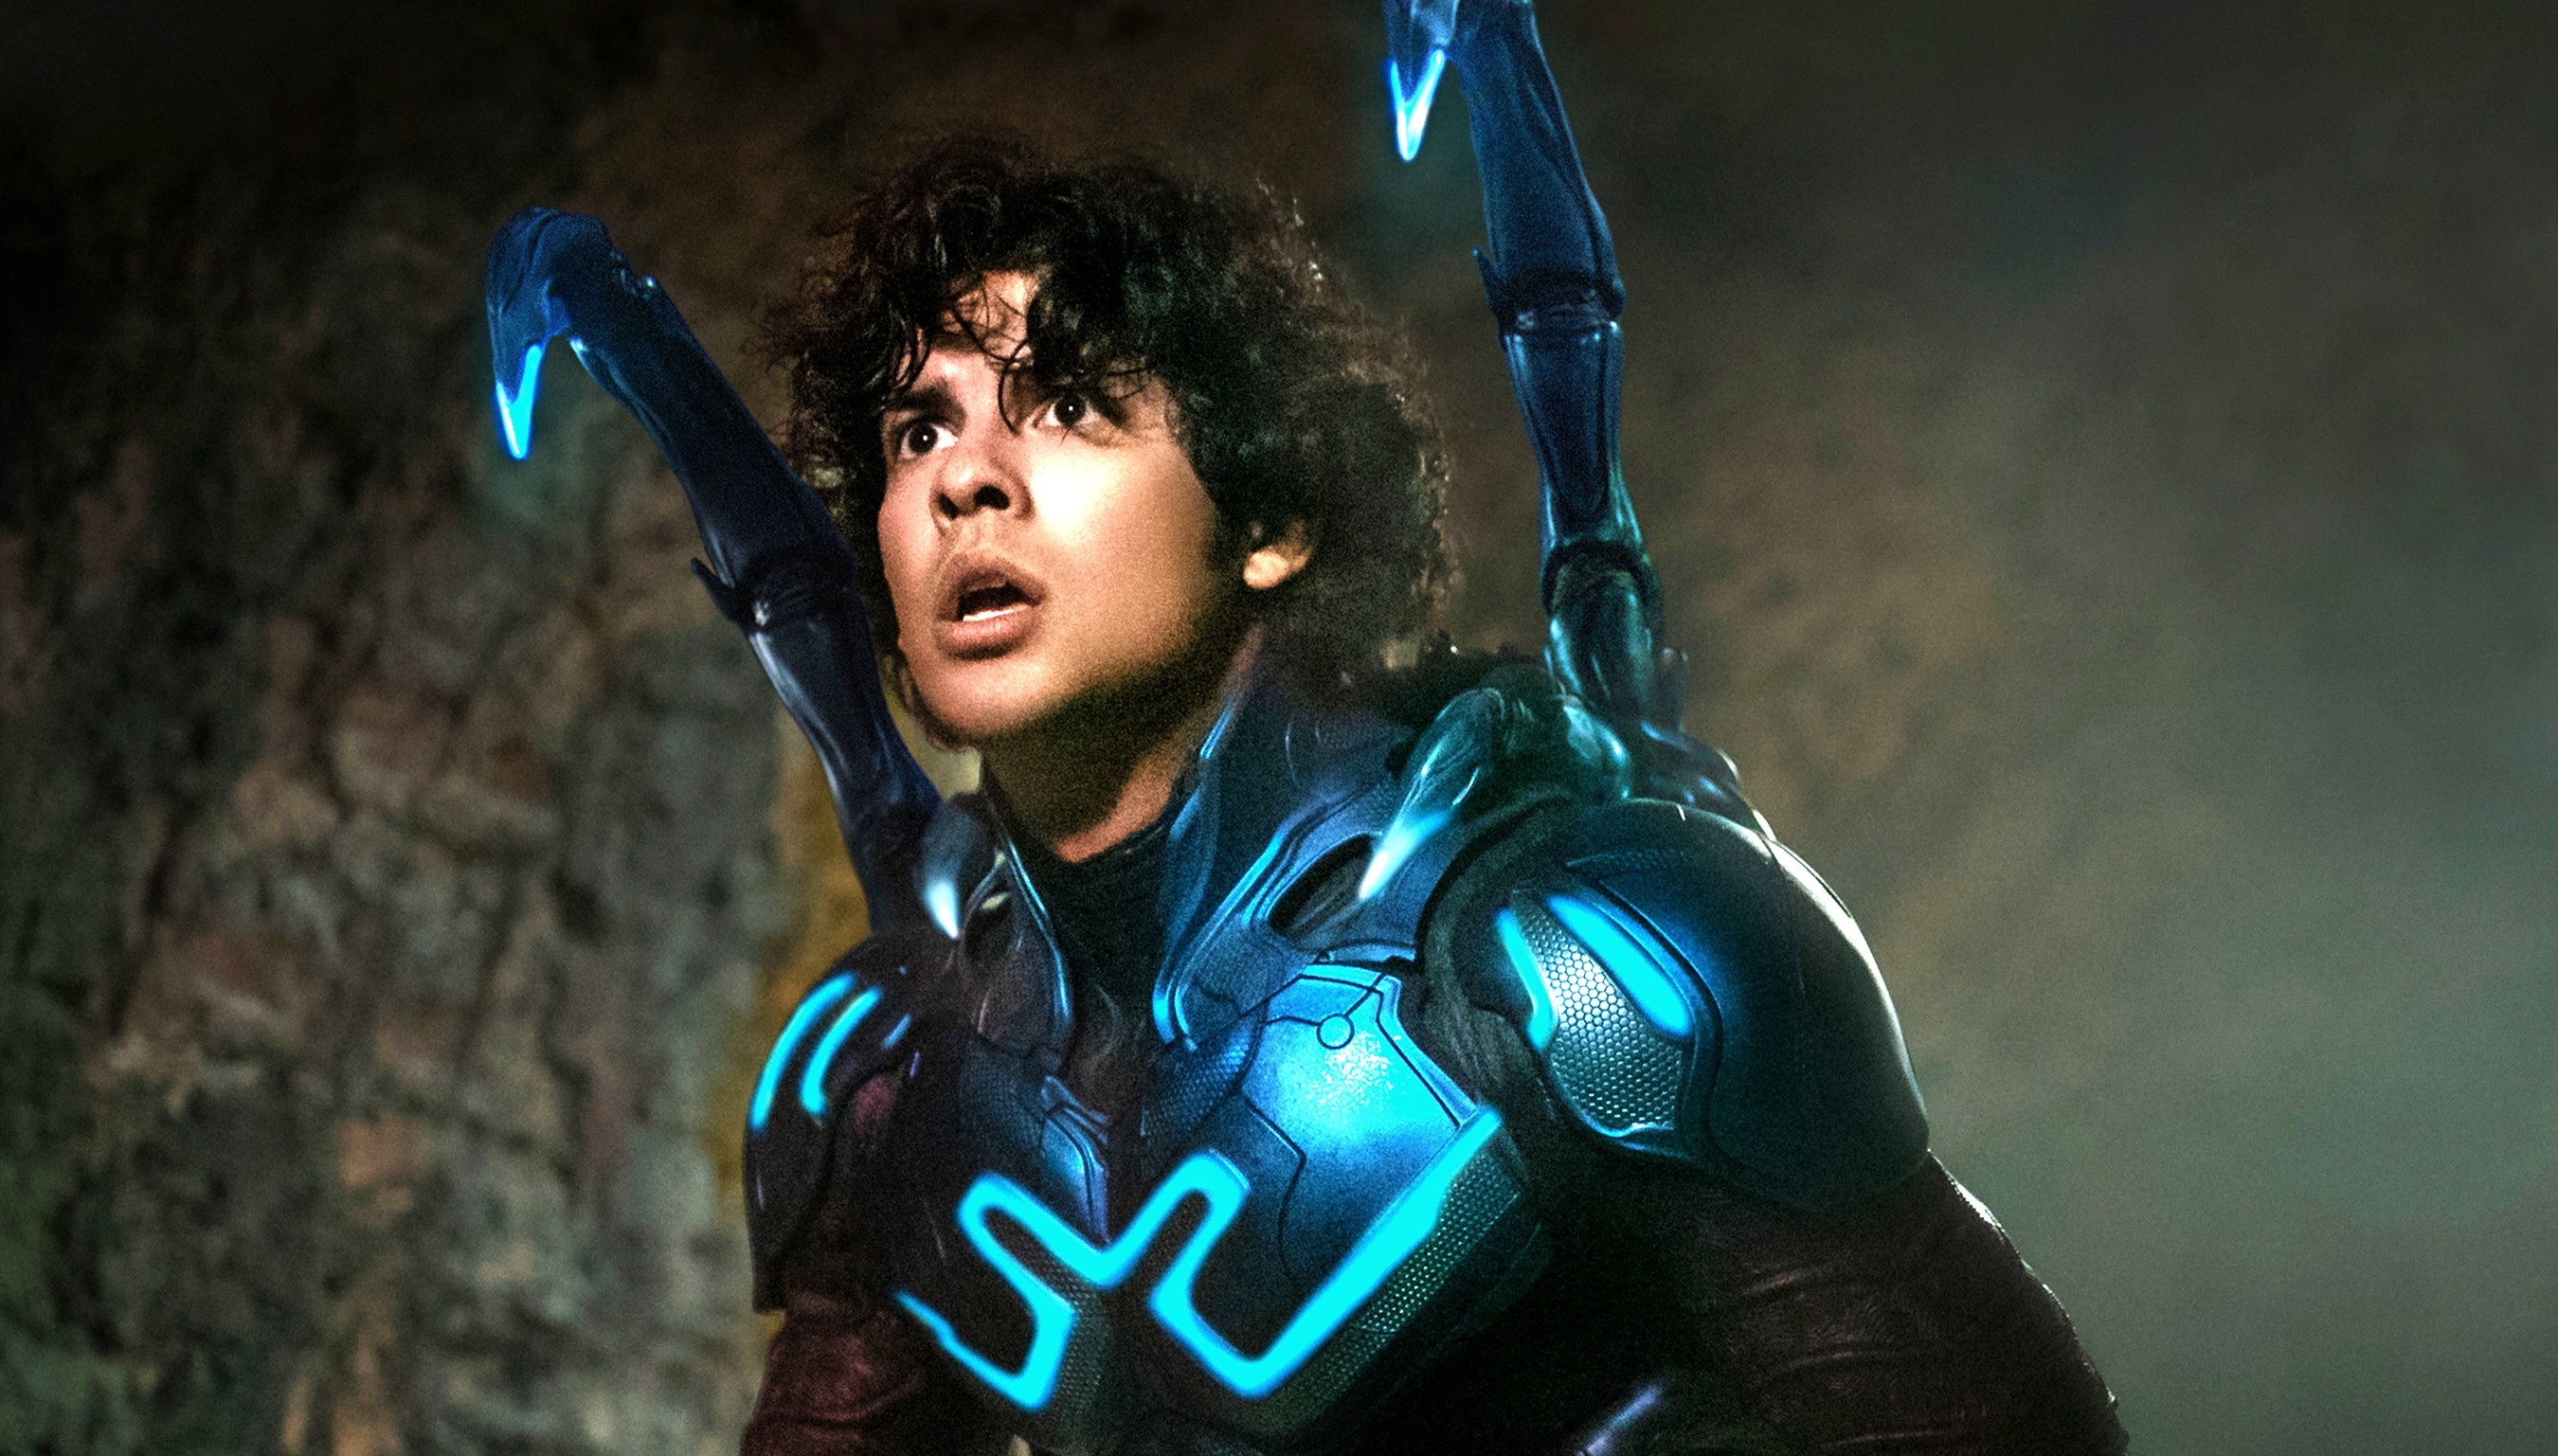 Bruna Marquezine joins the DC Universe with Blue Beetle